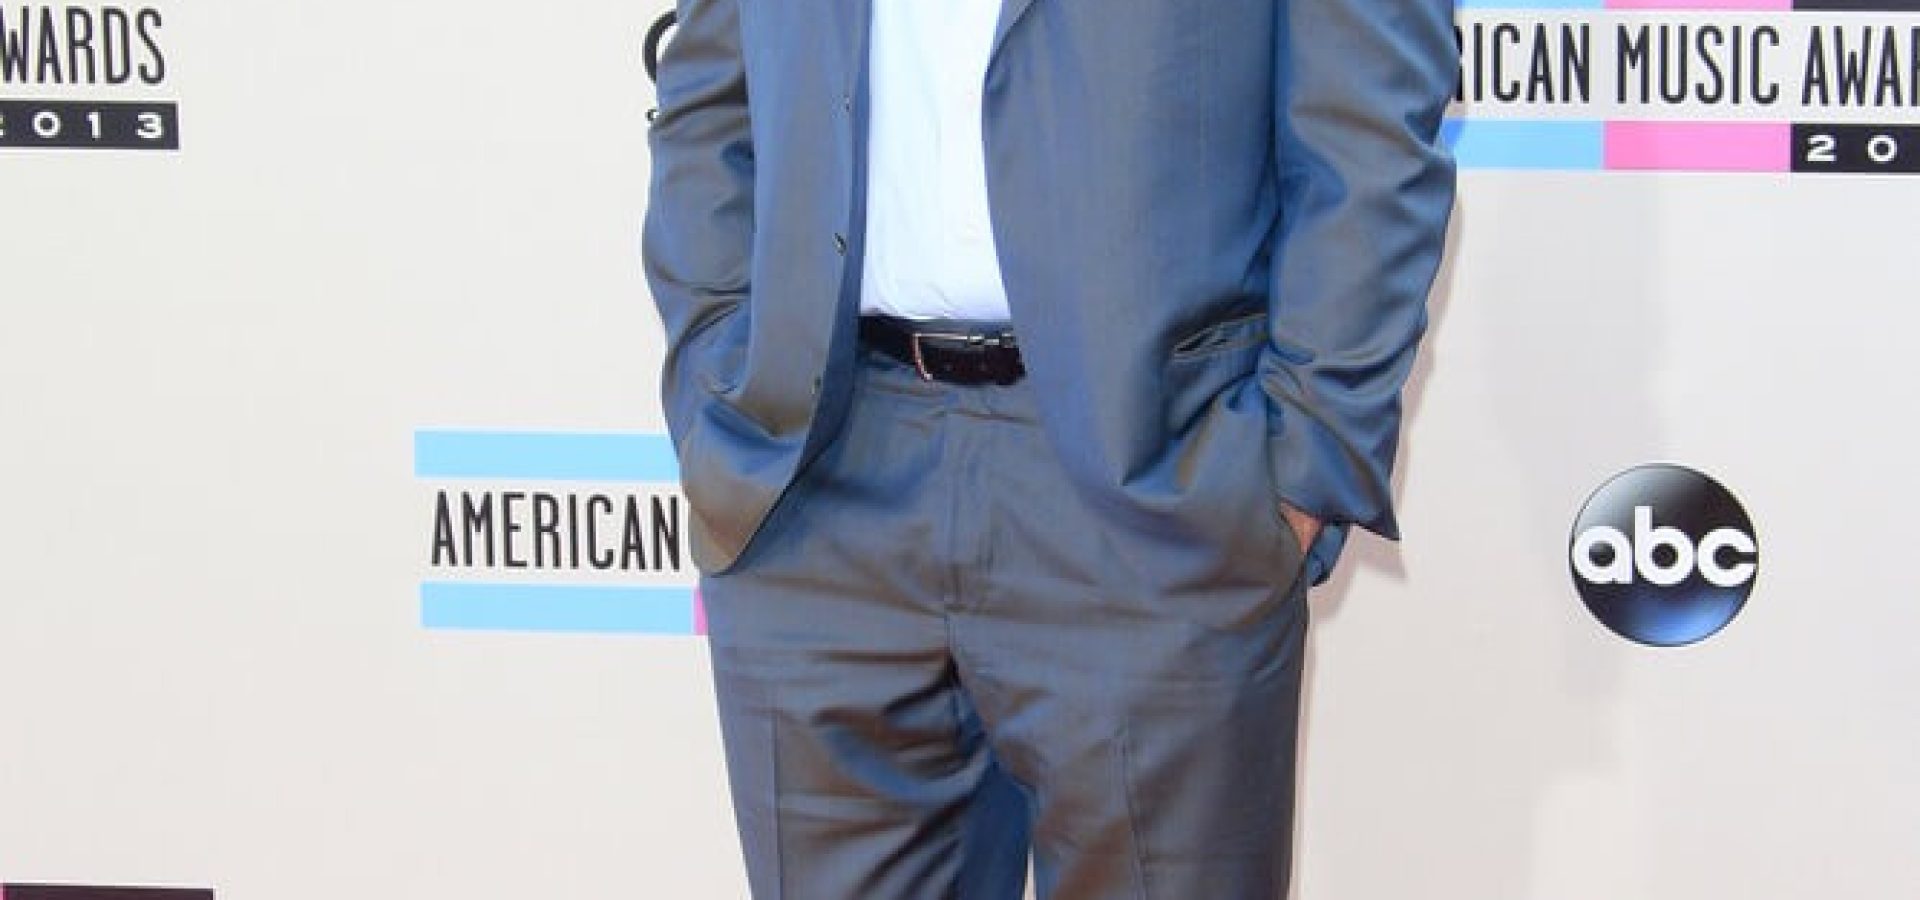 Digital Coins: Mark Cuban at the 2013 American Music Awards